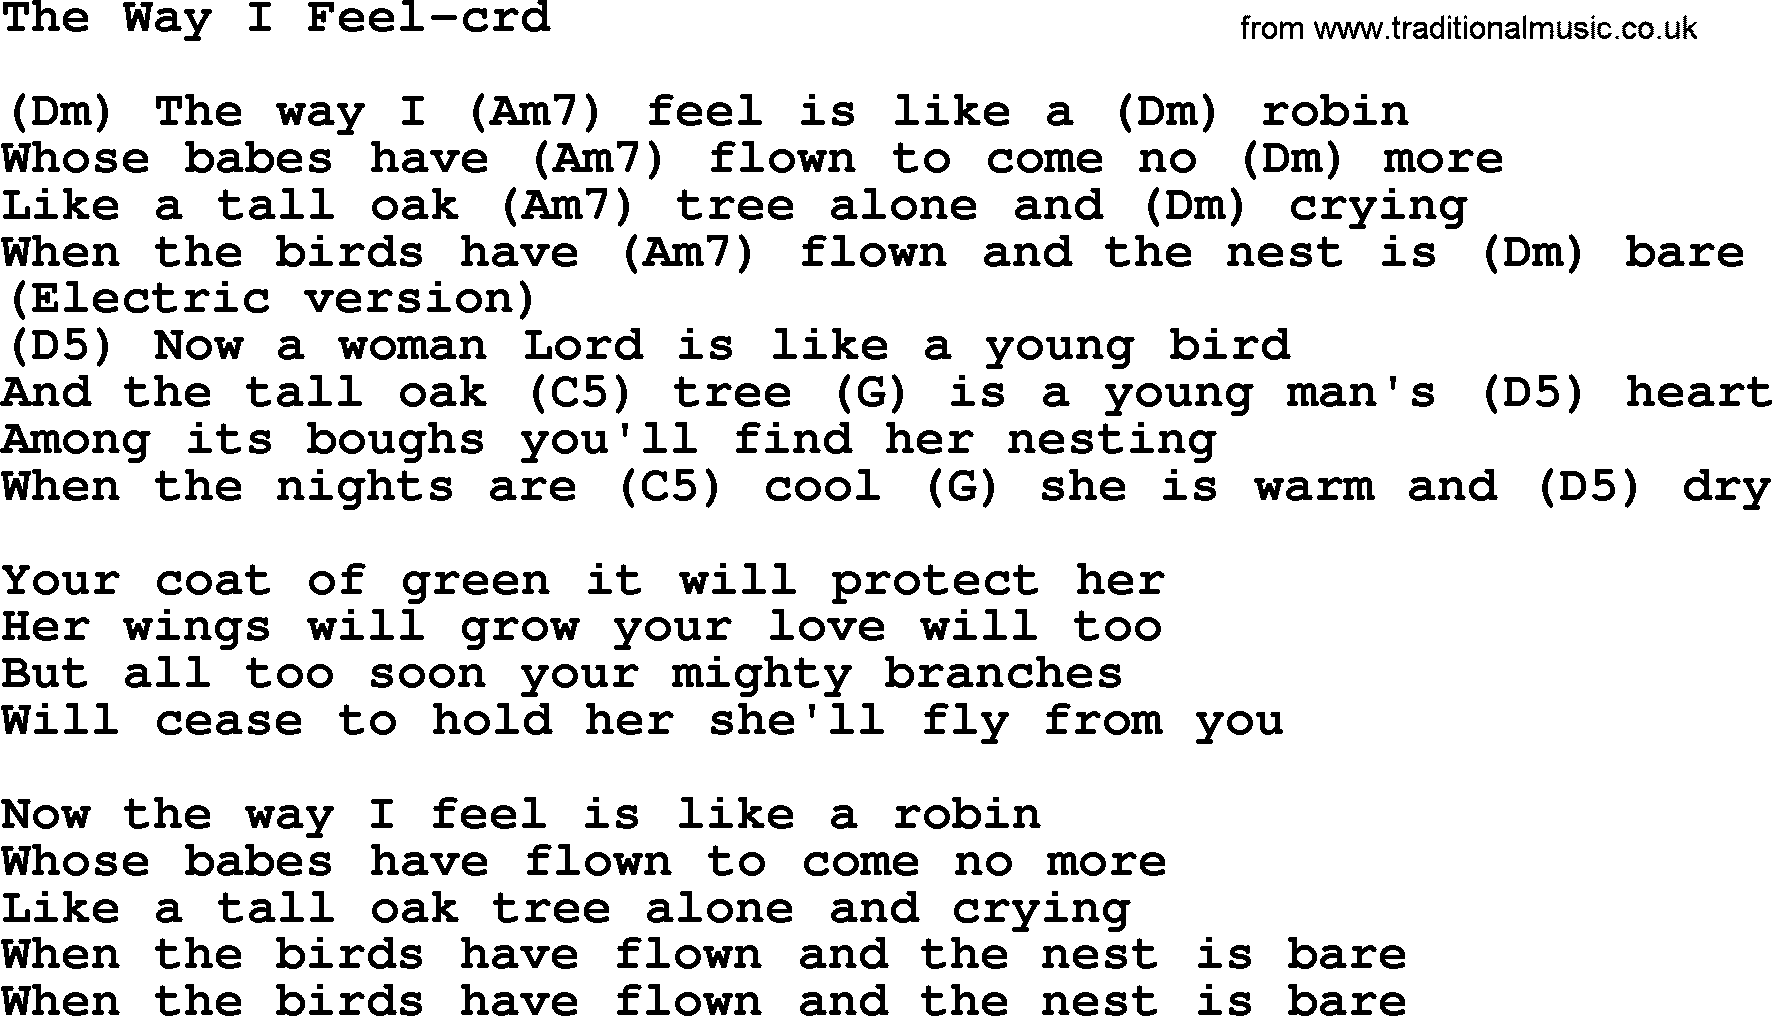 Gordon Lightfoot song The Way I Feel, lyrics and chords